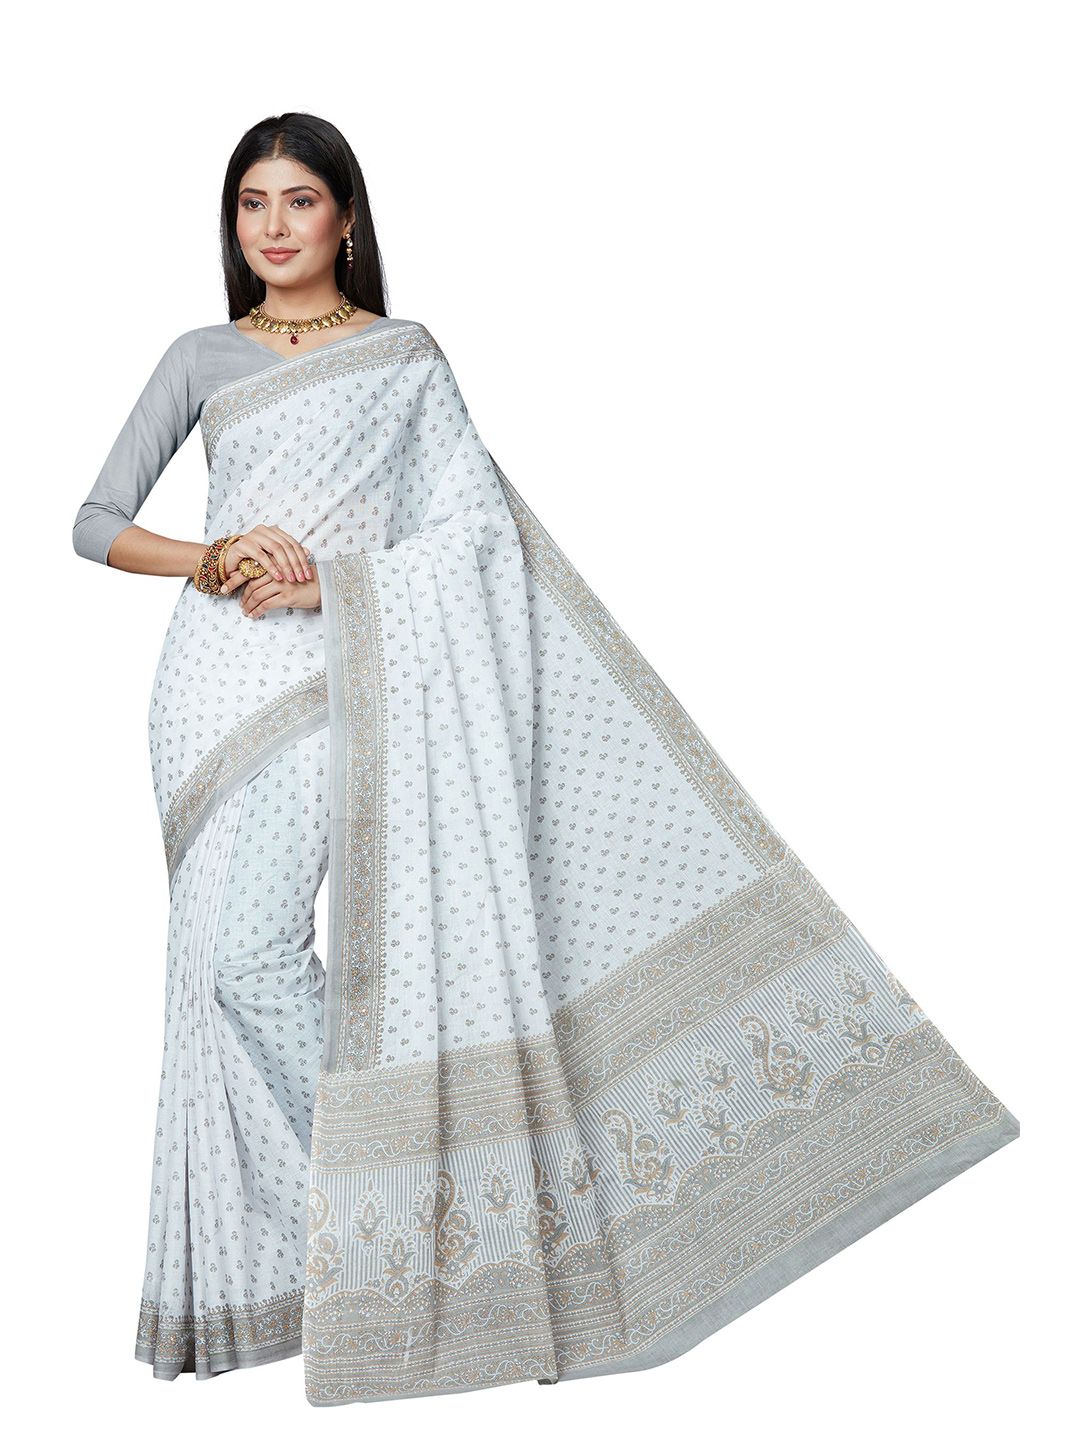 SHANVIKA White & Grey Ethnic Motifs Pure Cotton Block Print Saree Price in India